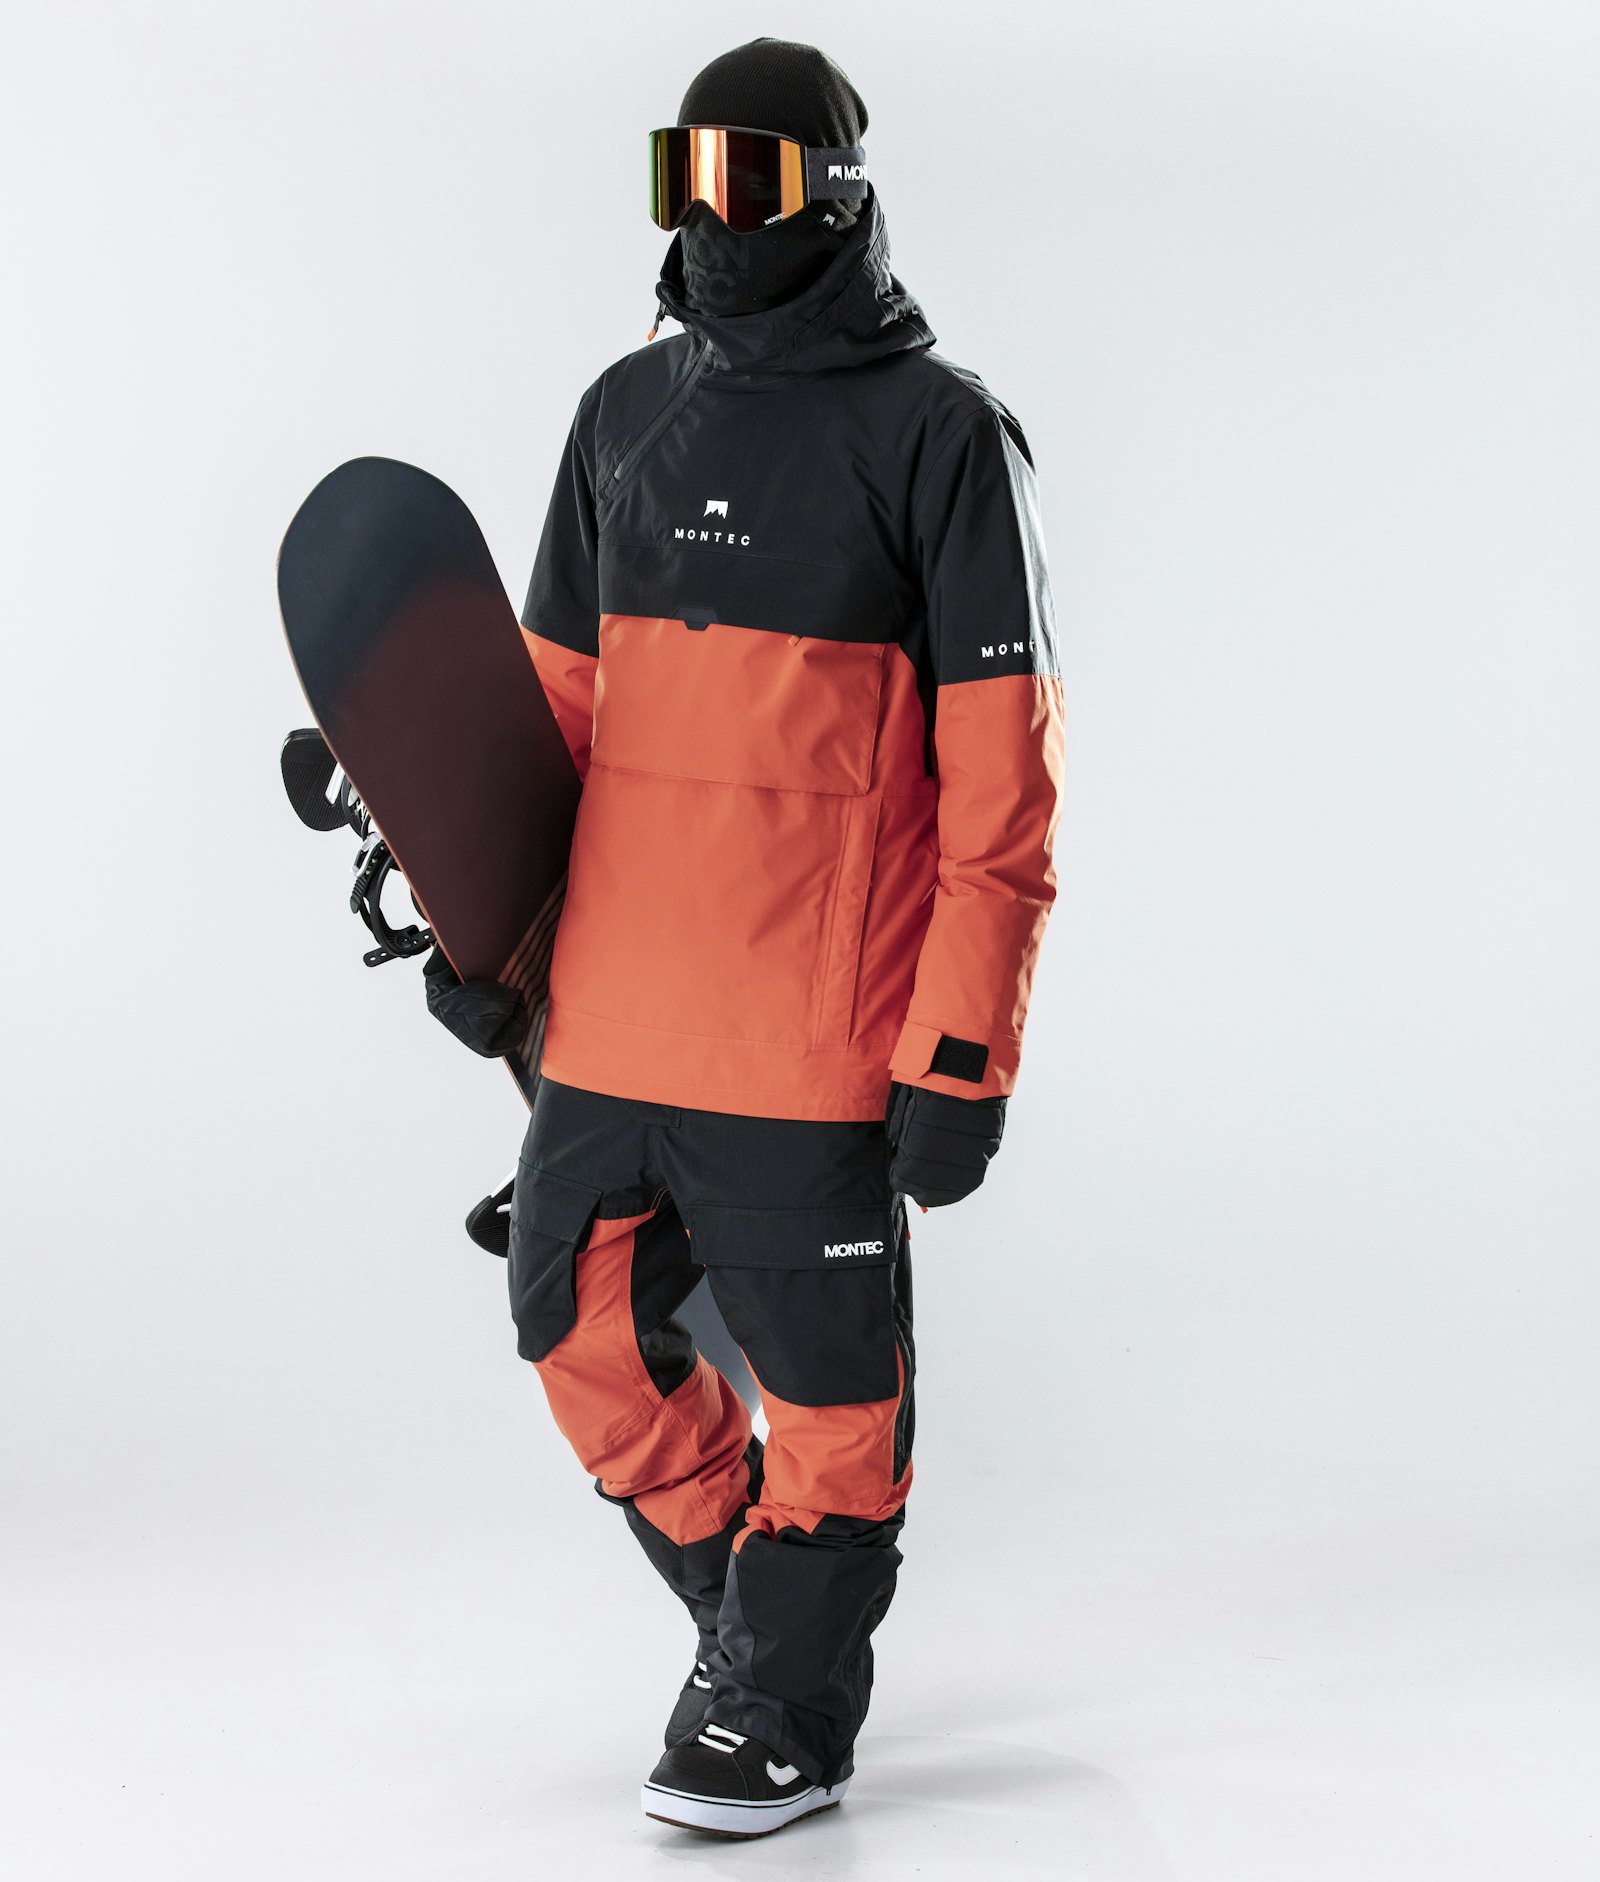 Montec Dune 2020 Snowboard Jacket Men Black/Orange